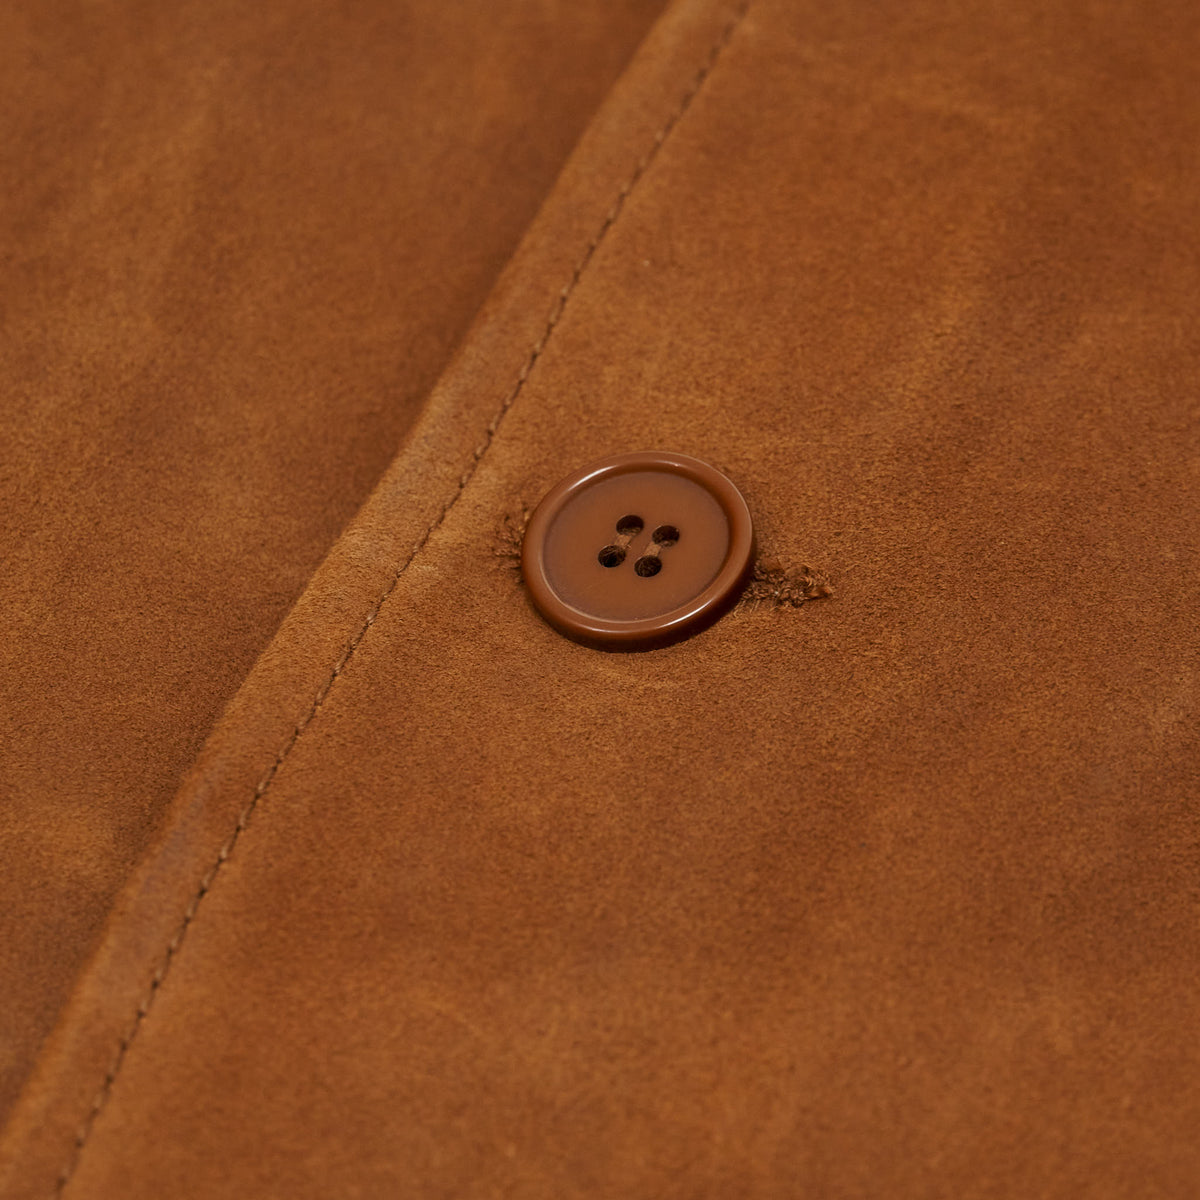 DeeCee style Harrington Leather Jacket